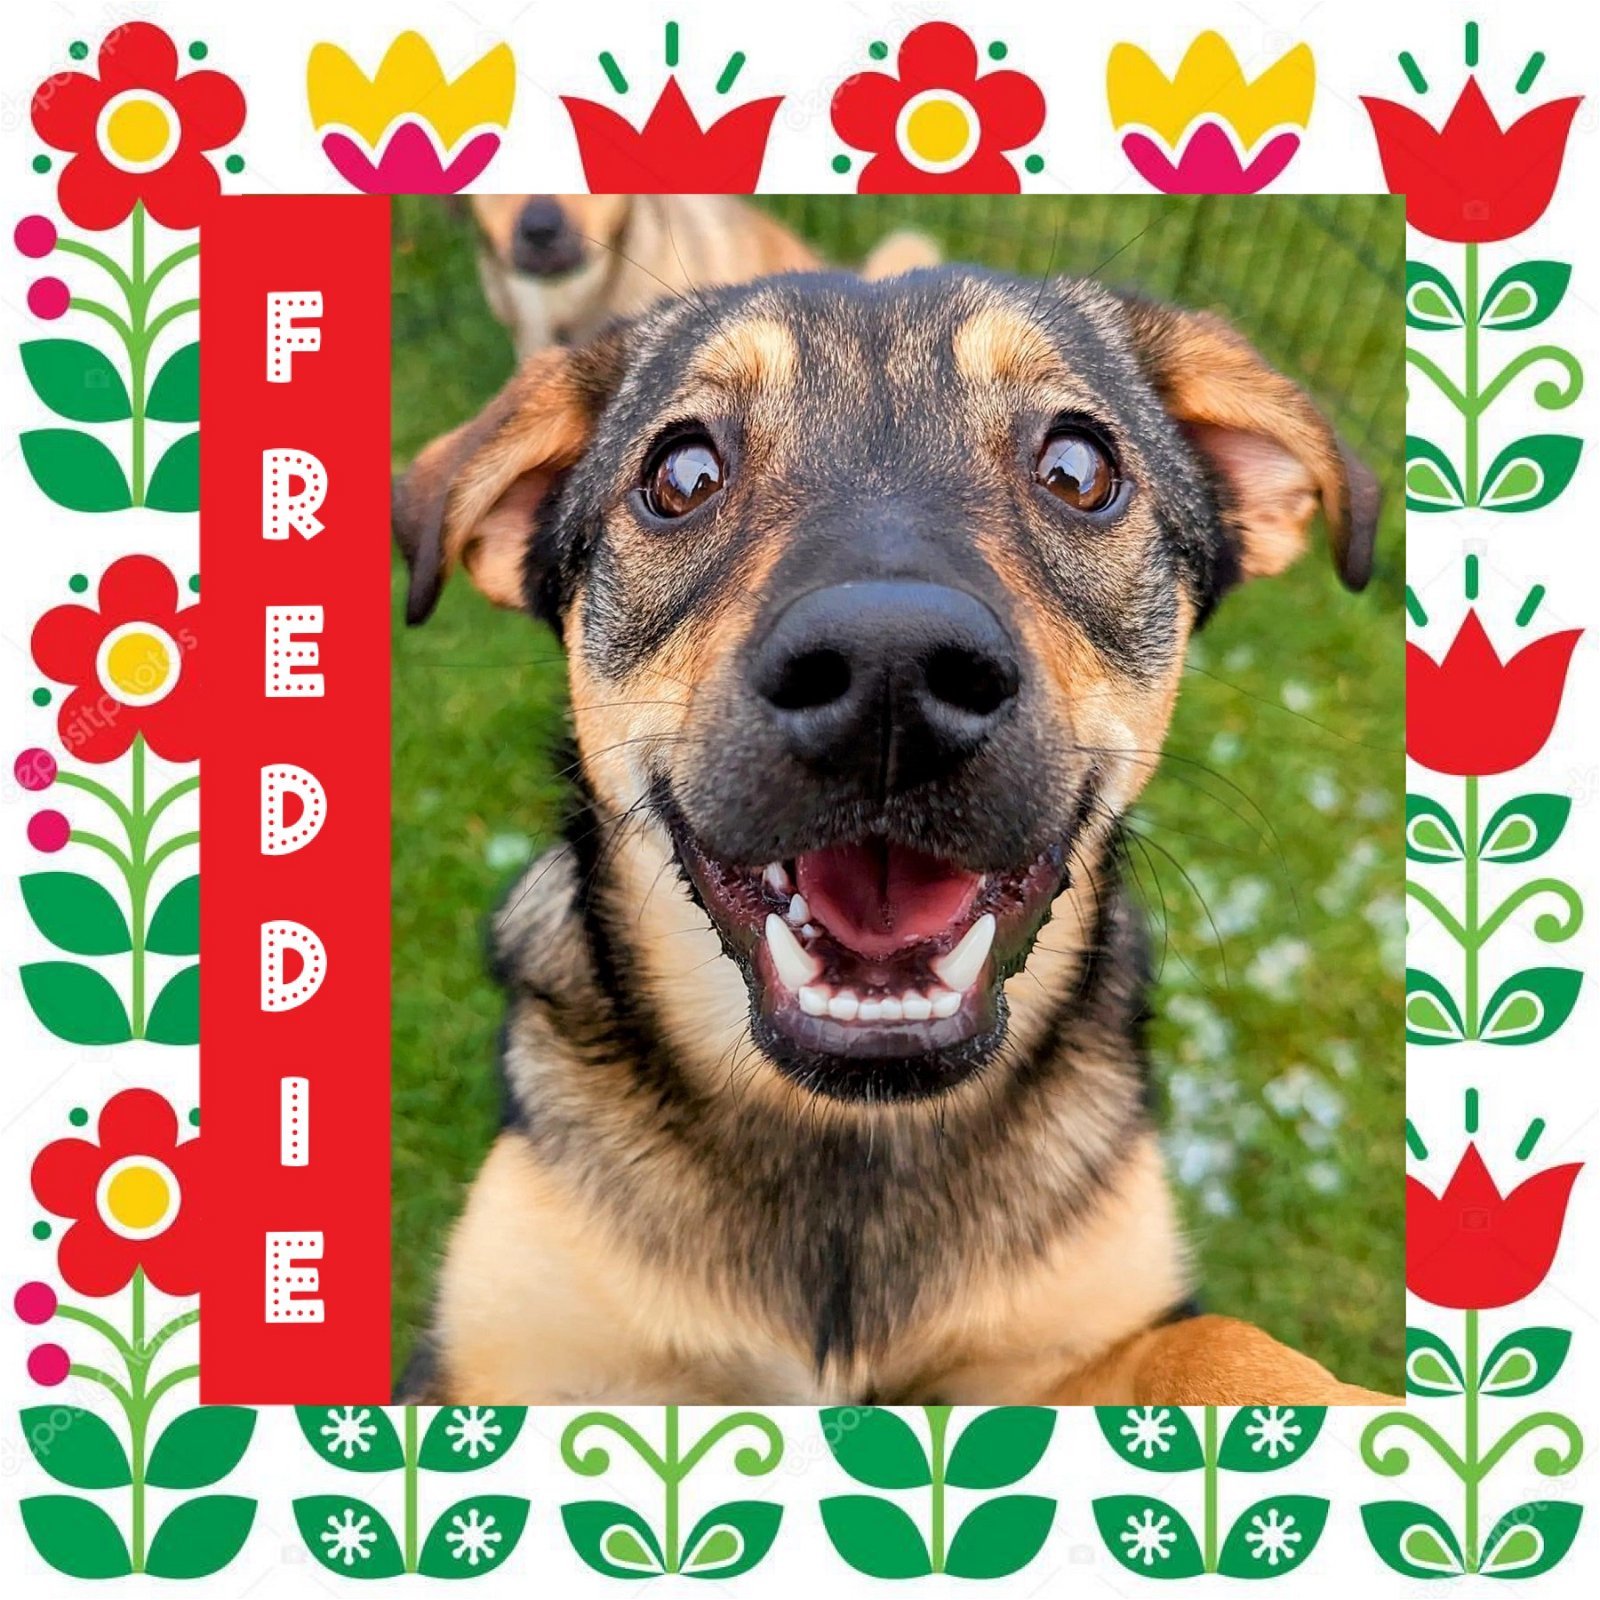 Freddie, an adoptable Keeshond in Littleton, CO, 80130 | Photo Image 1